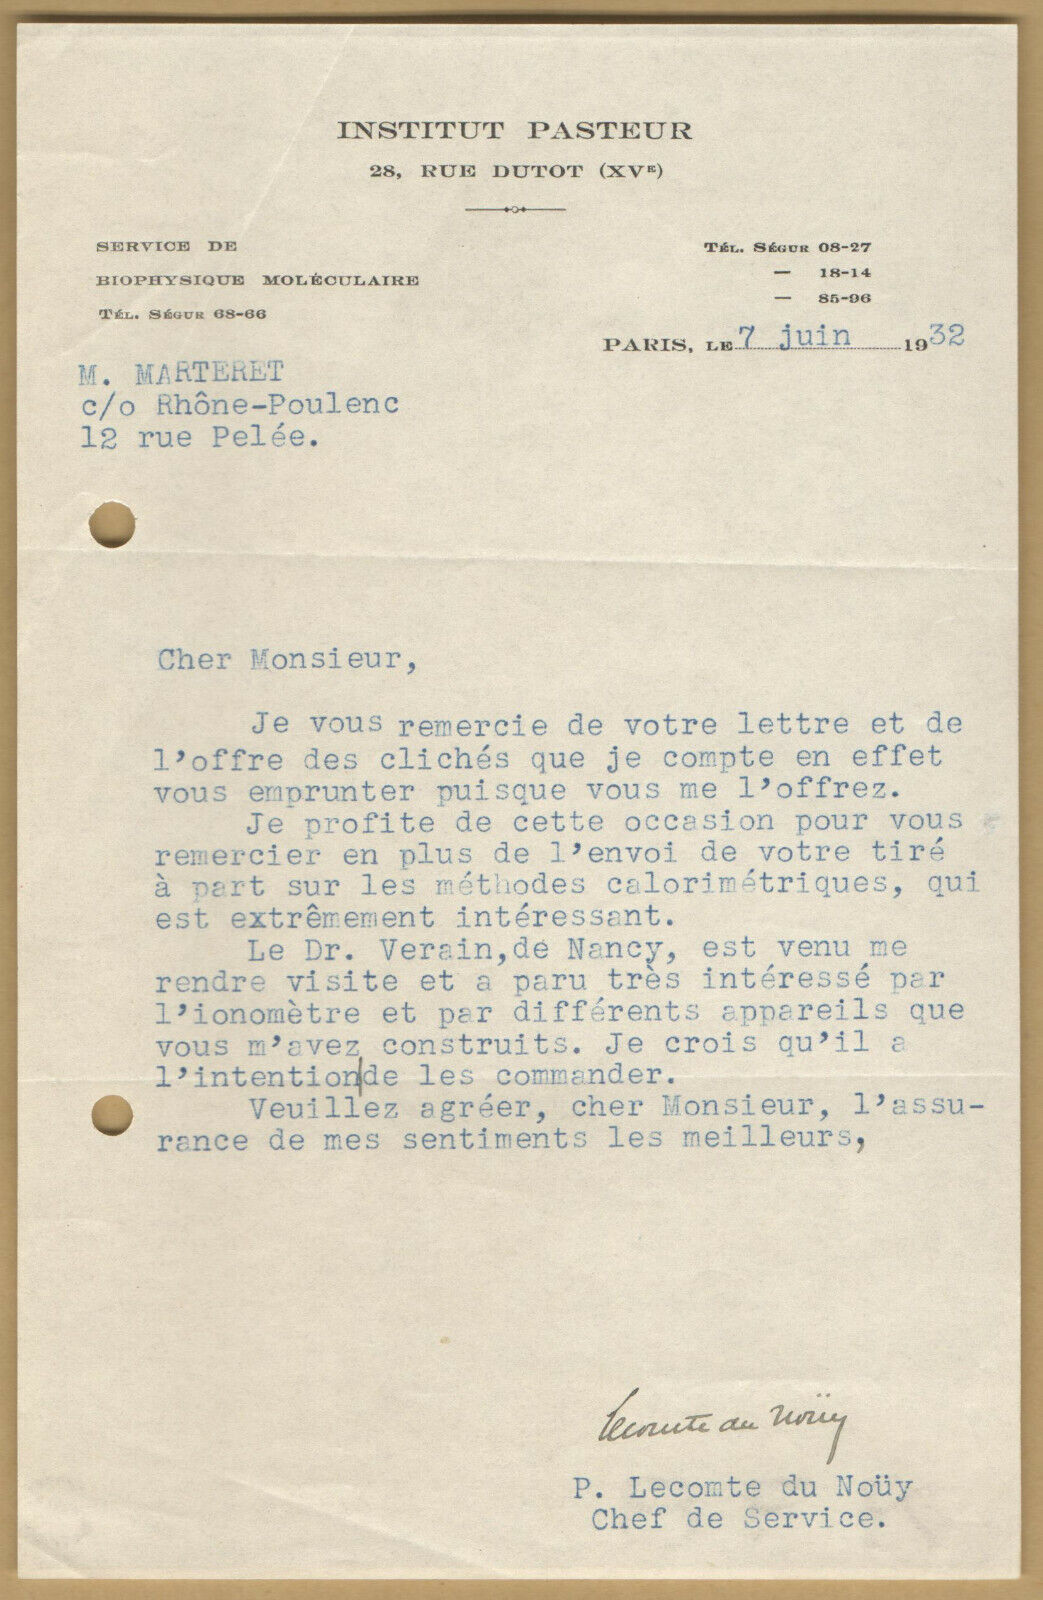 Pierre Lecomte du Nouy (1883-1947) - French biophysicist - Signed letter - 1932